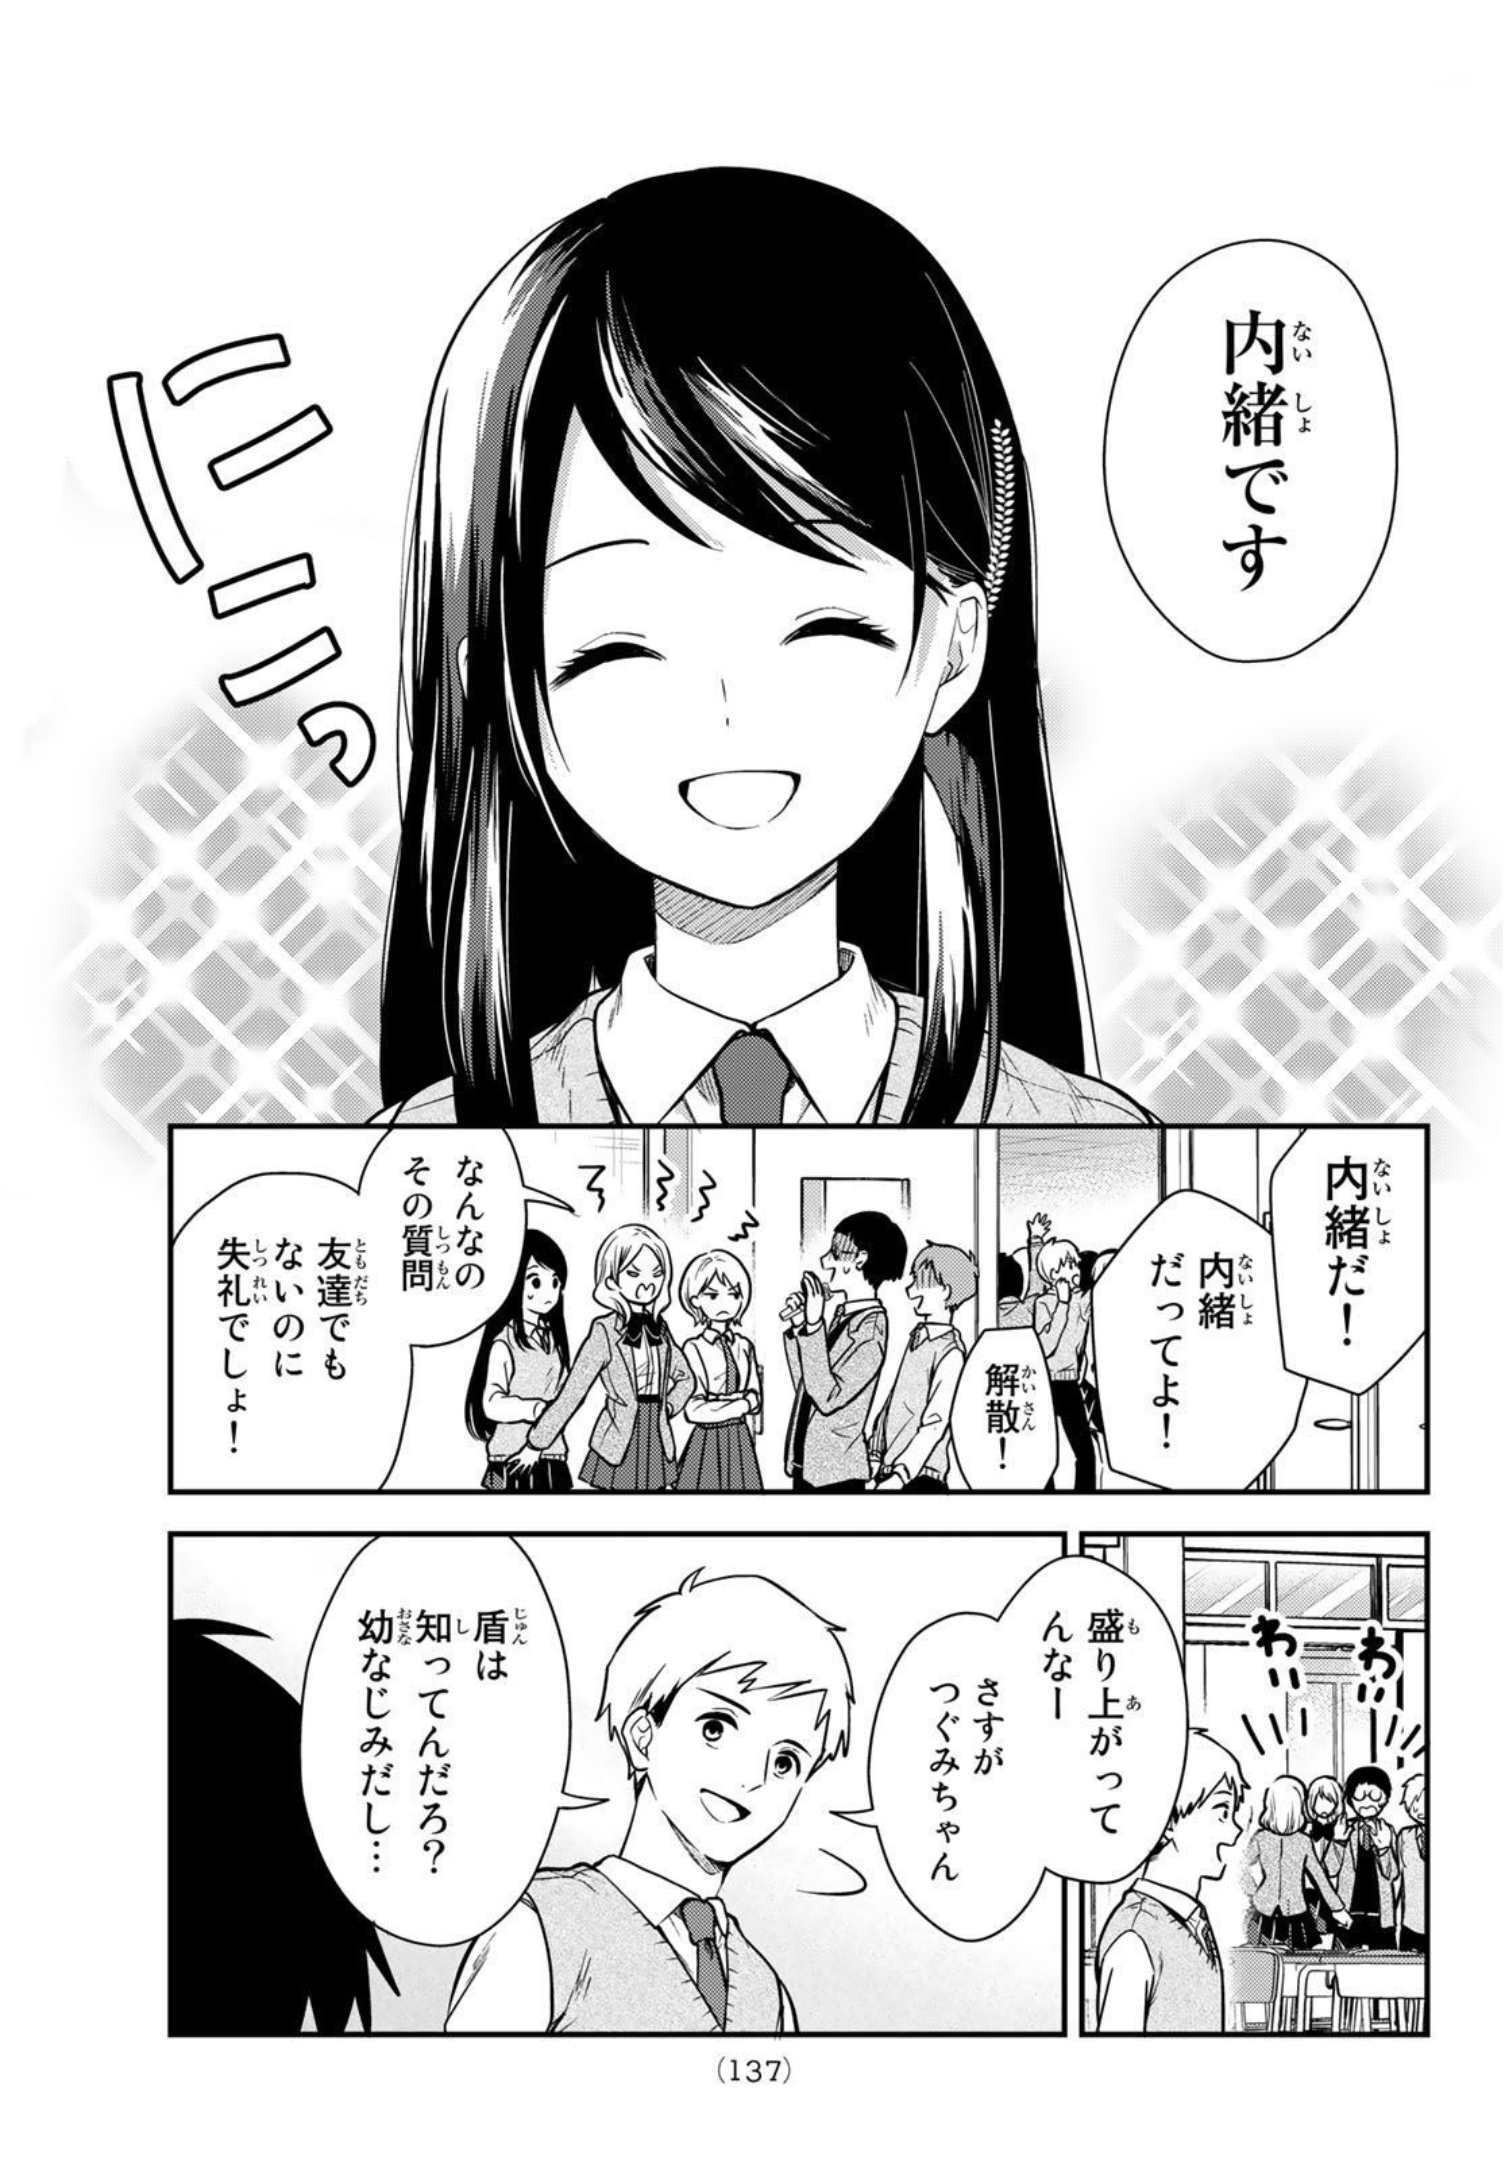 Kimi ga Megami Nara Ii no ni (I Wish You Were My Muse) - Chapter 003 - Page 3